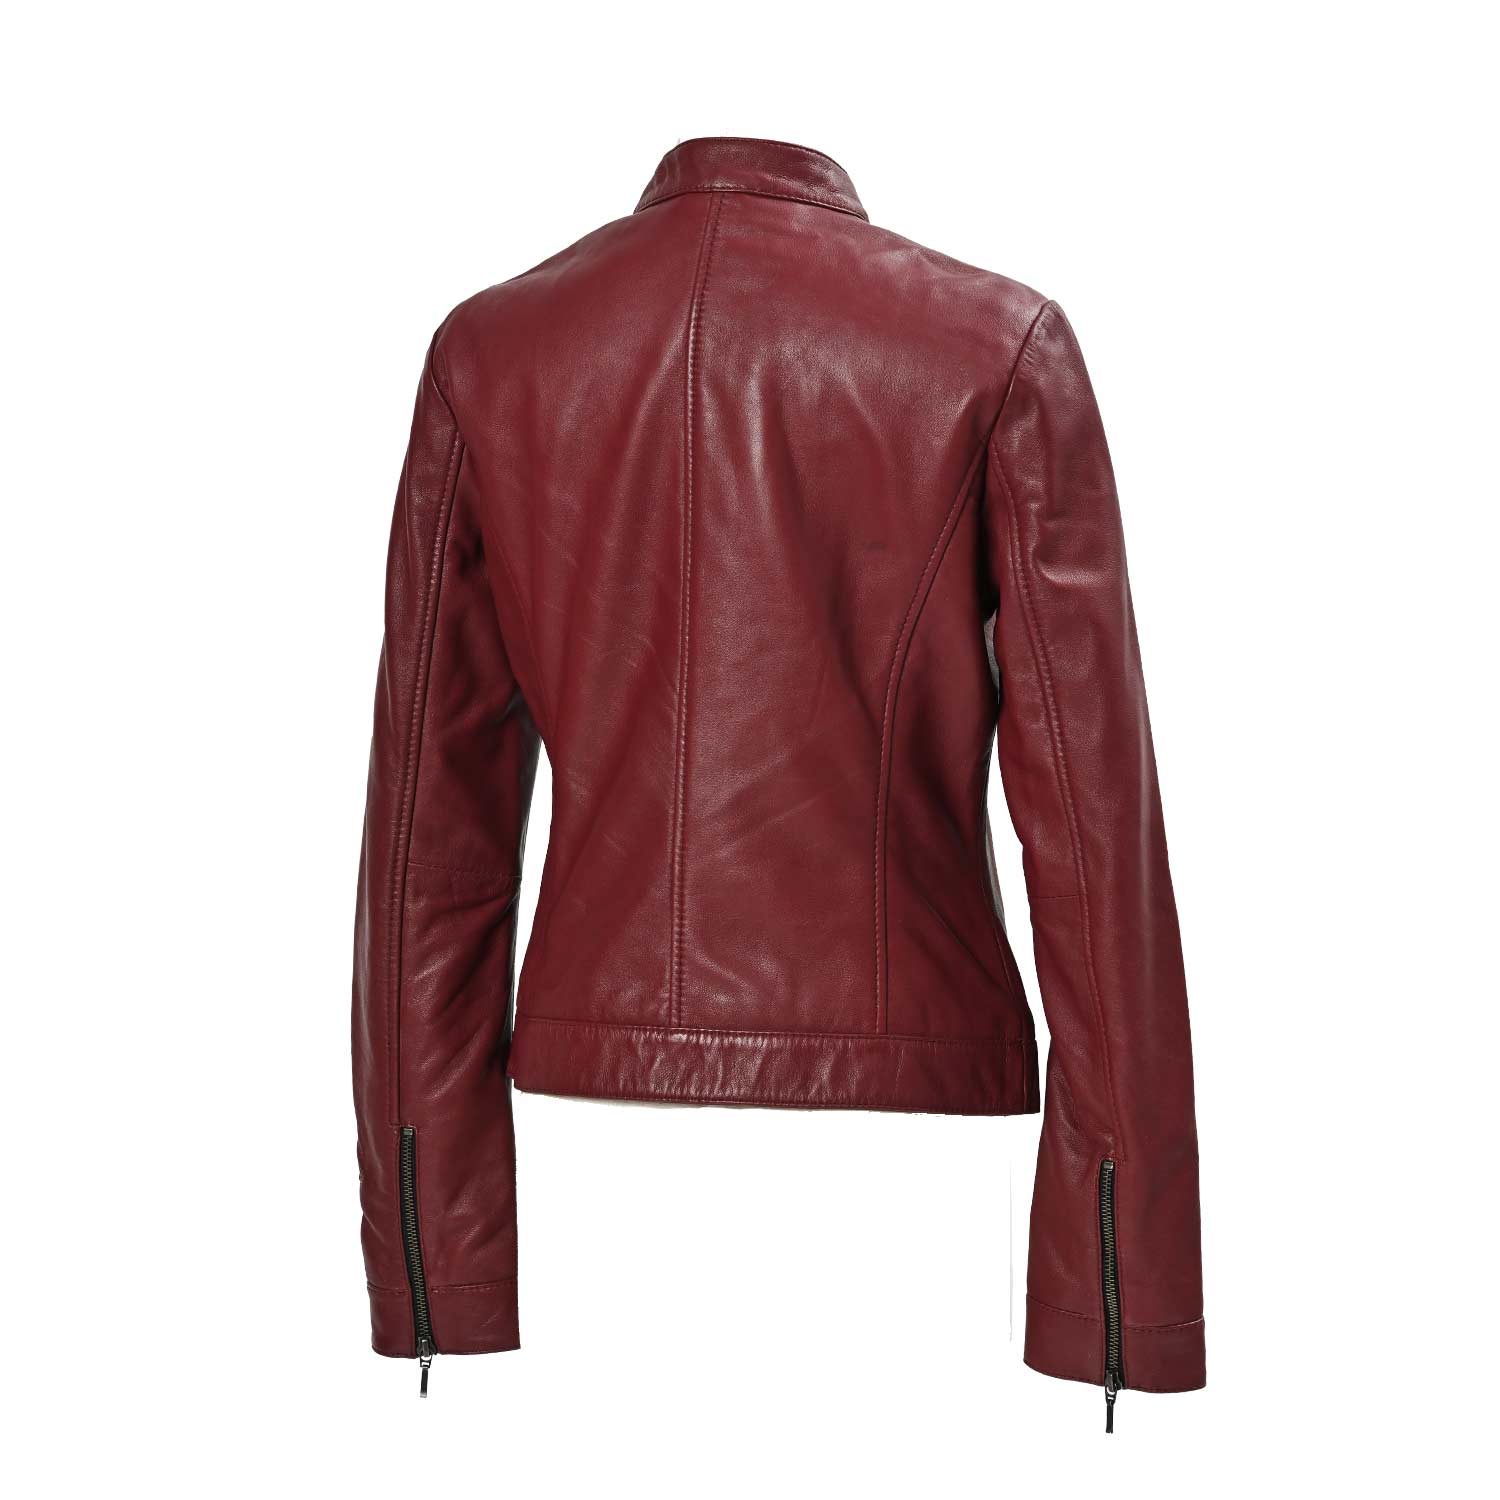 SugarRidez HEARTS JACKET WINE RED Women's Leather Jacket SLJ203 